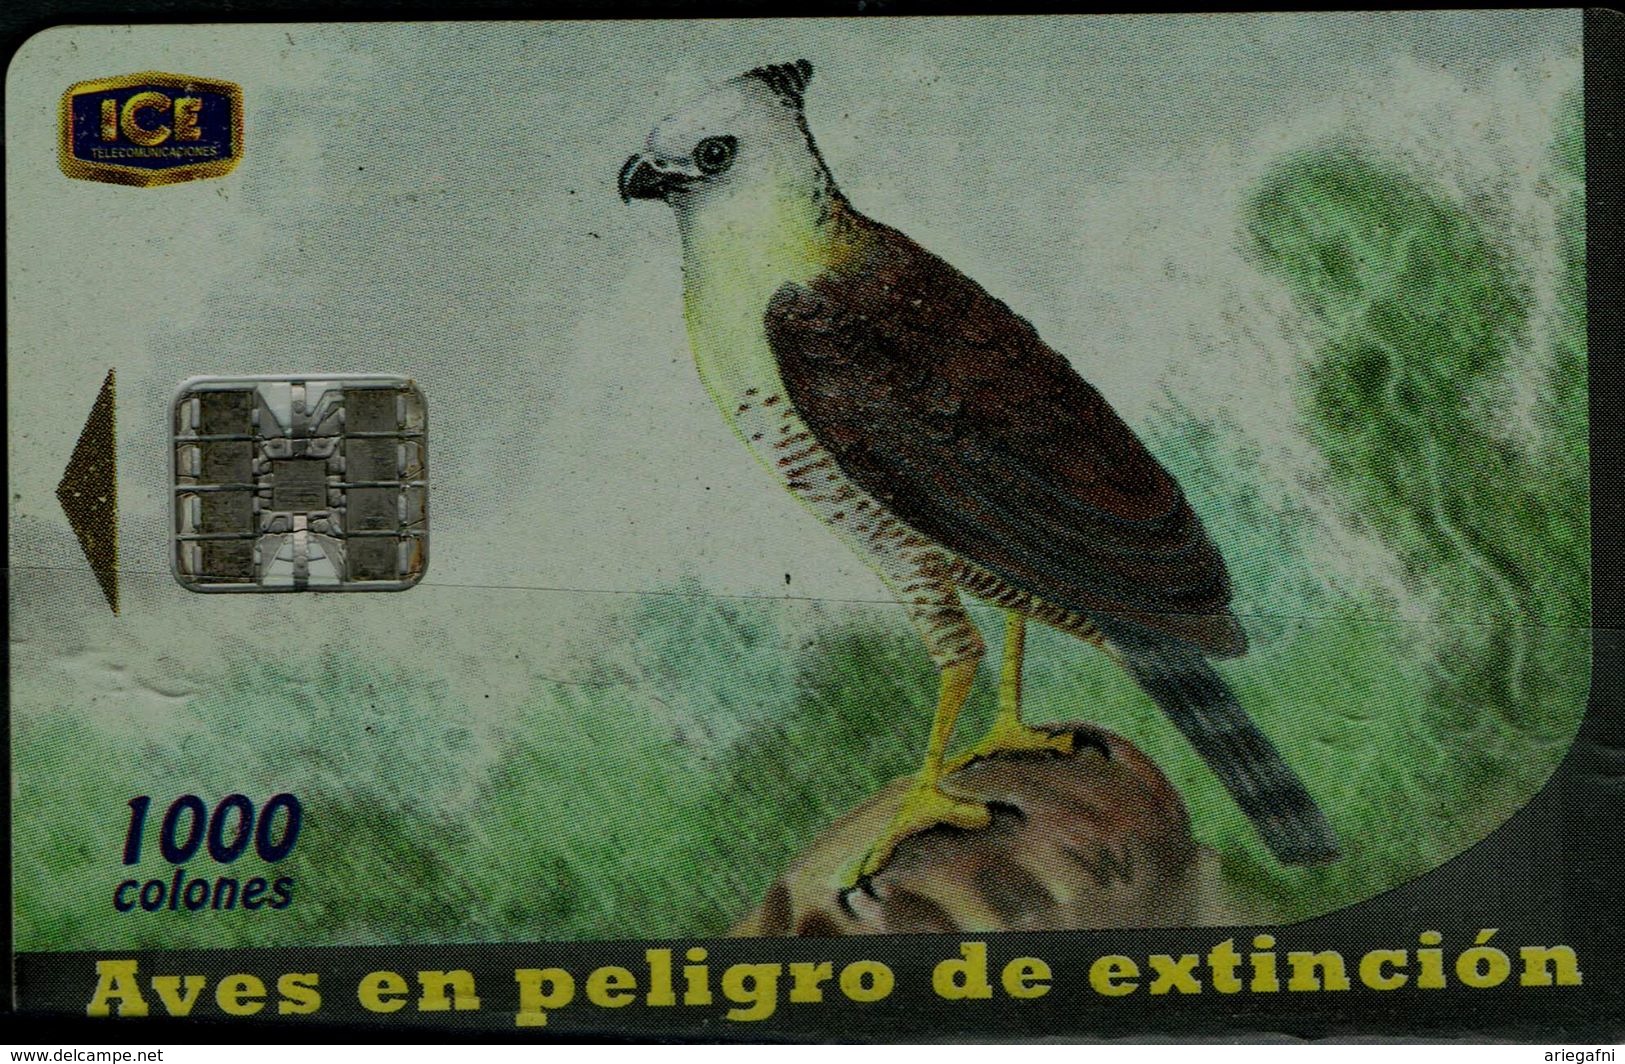 COSTA RICA 2003 PHONECARD BIRDS USED VF!! - Adler & Greifvögel